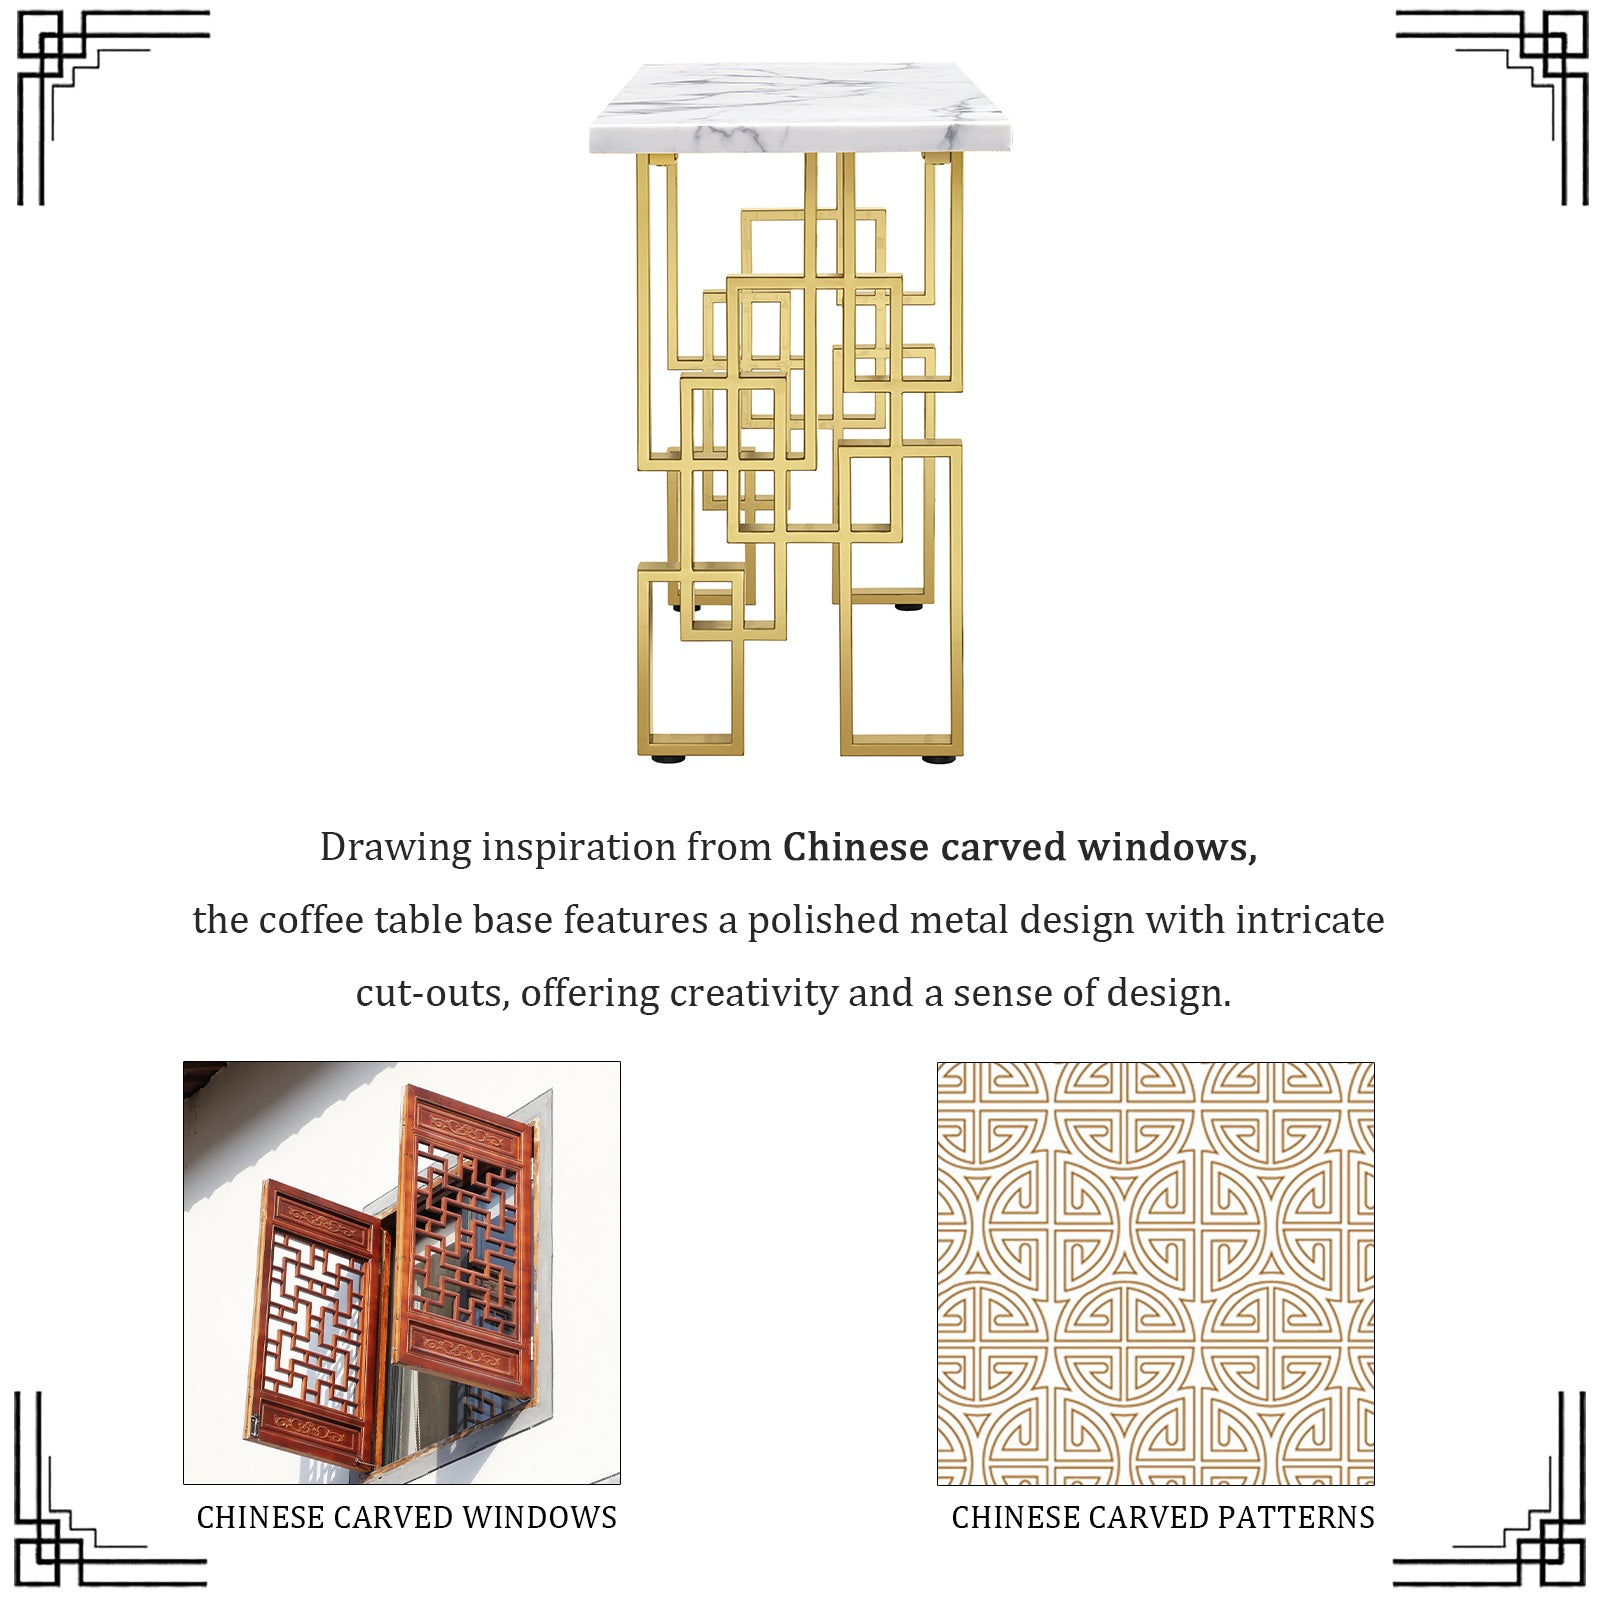 AUZ White Gold Sofa table with geometric legs | S521